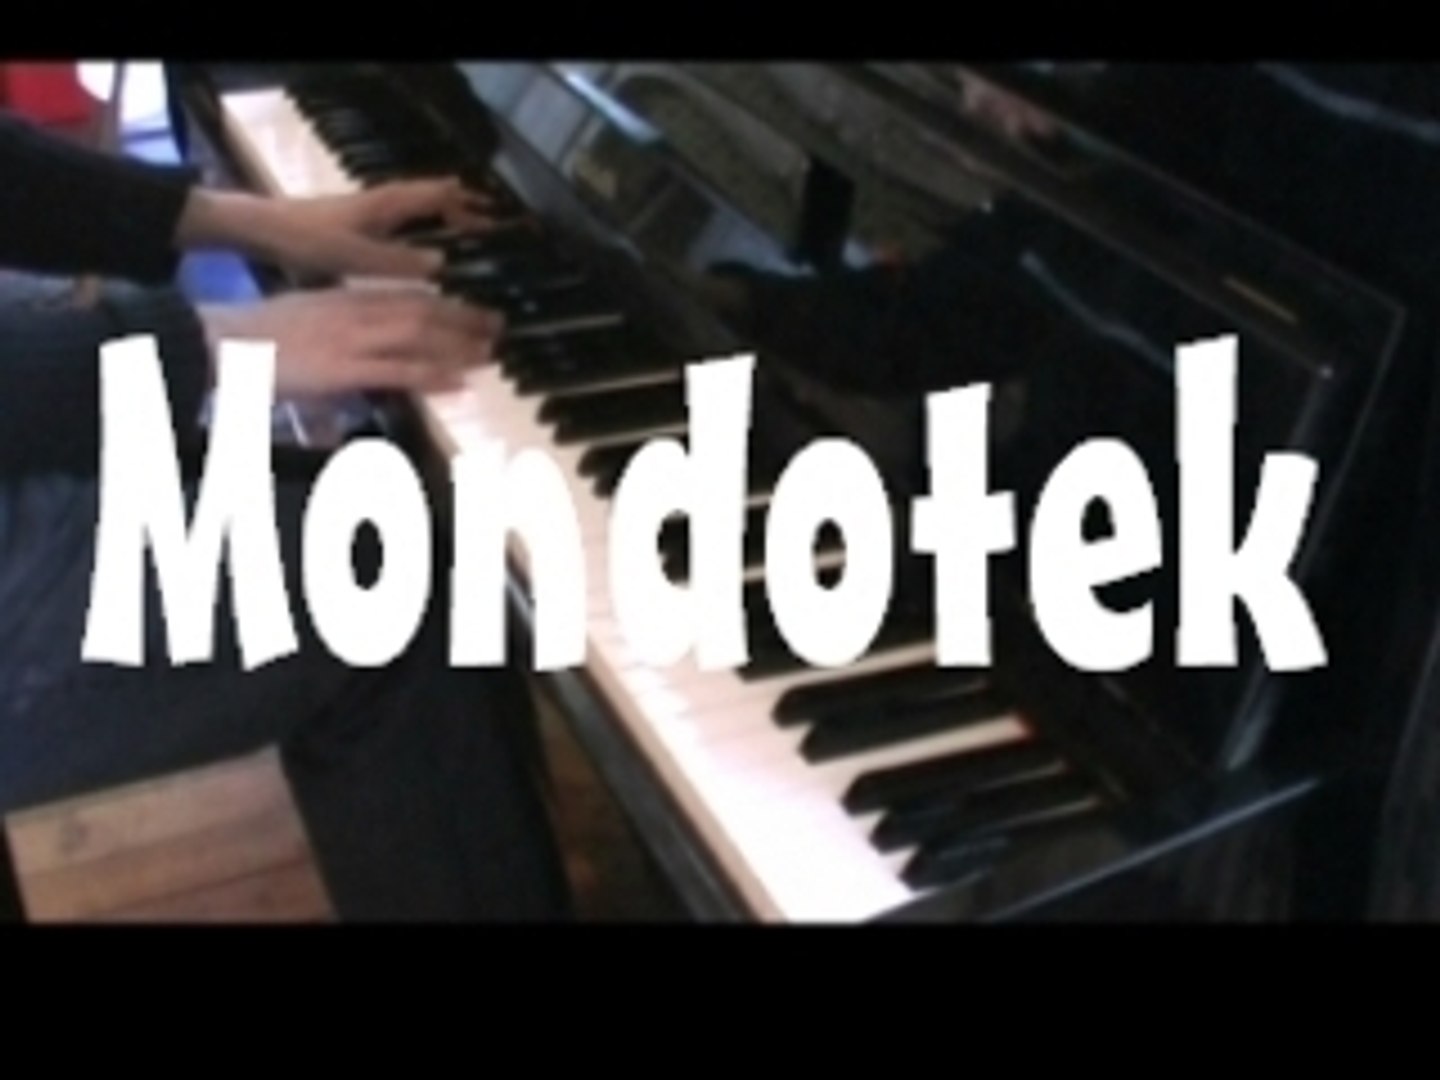 Mondotek Pianalive - Vidéo Dailymotion